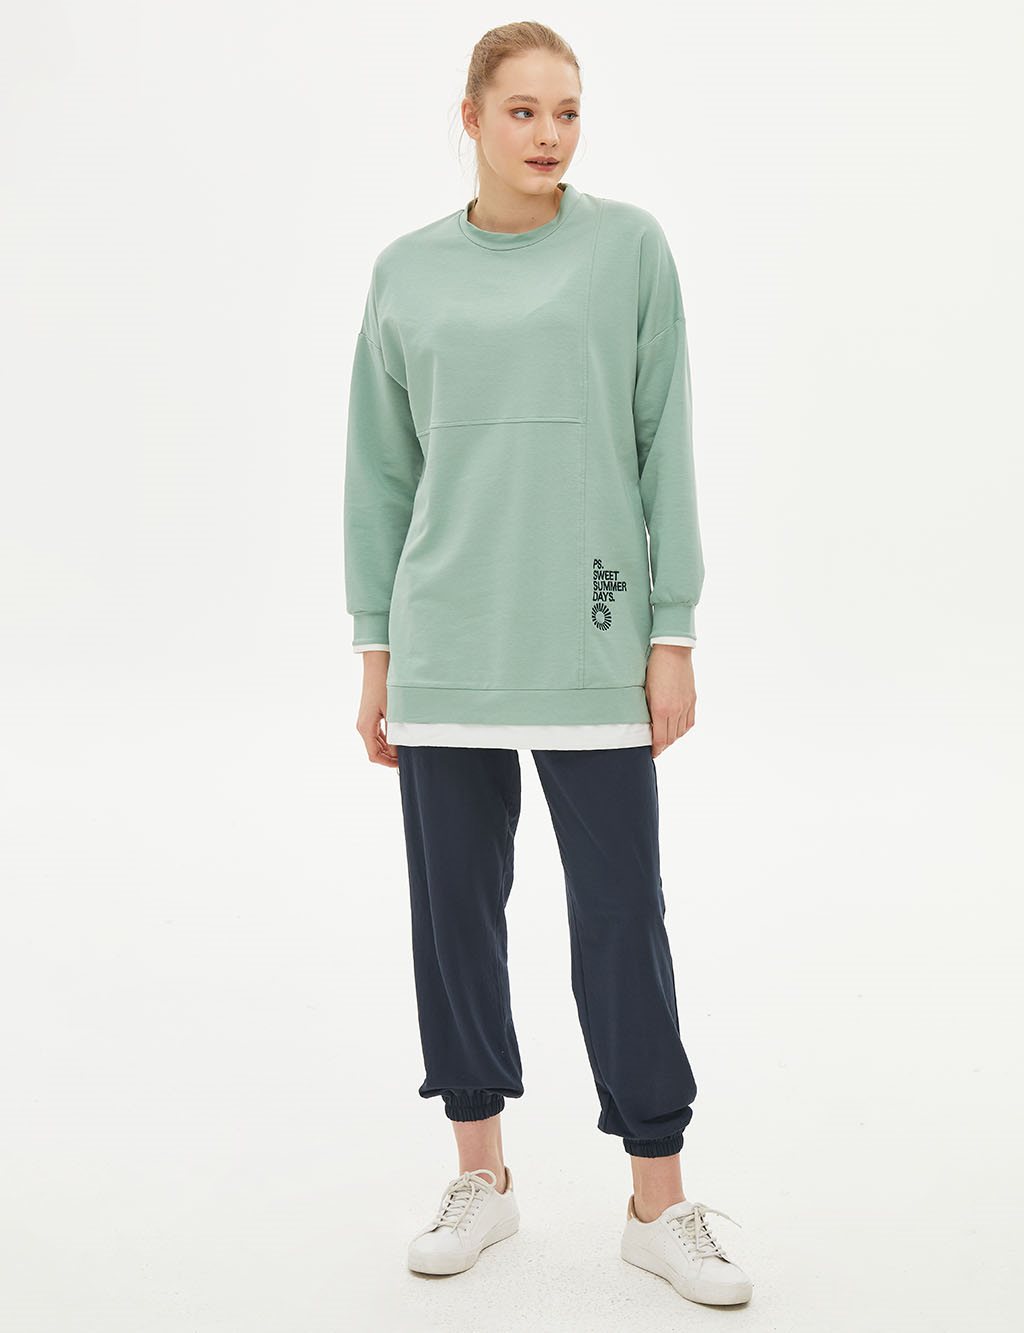 Katman Görünümlü Parçalı Sweatshirt Mint